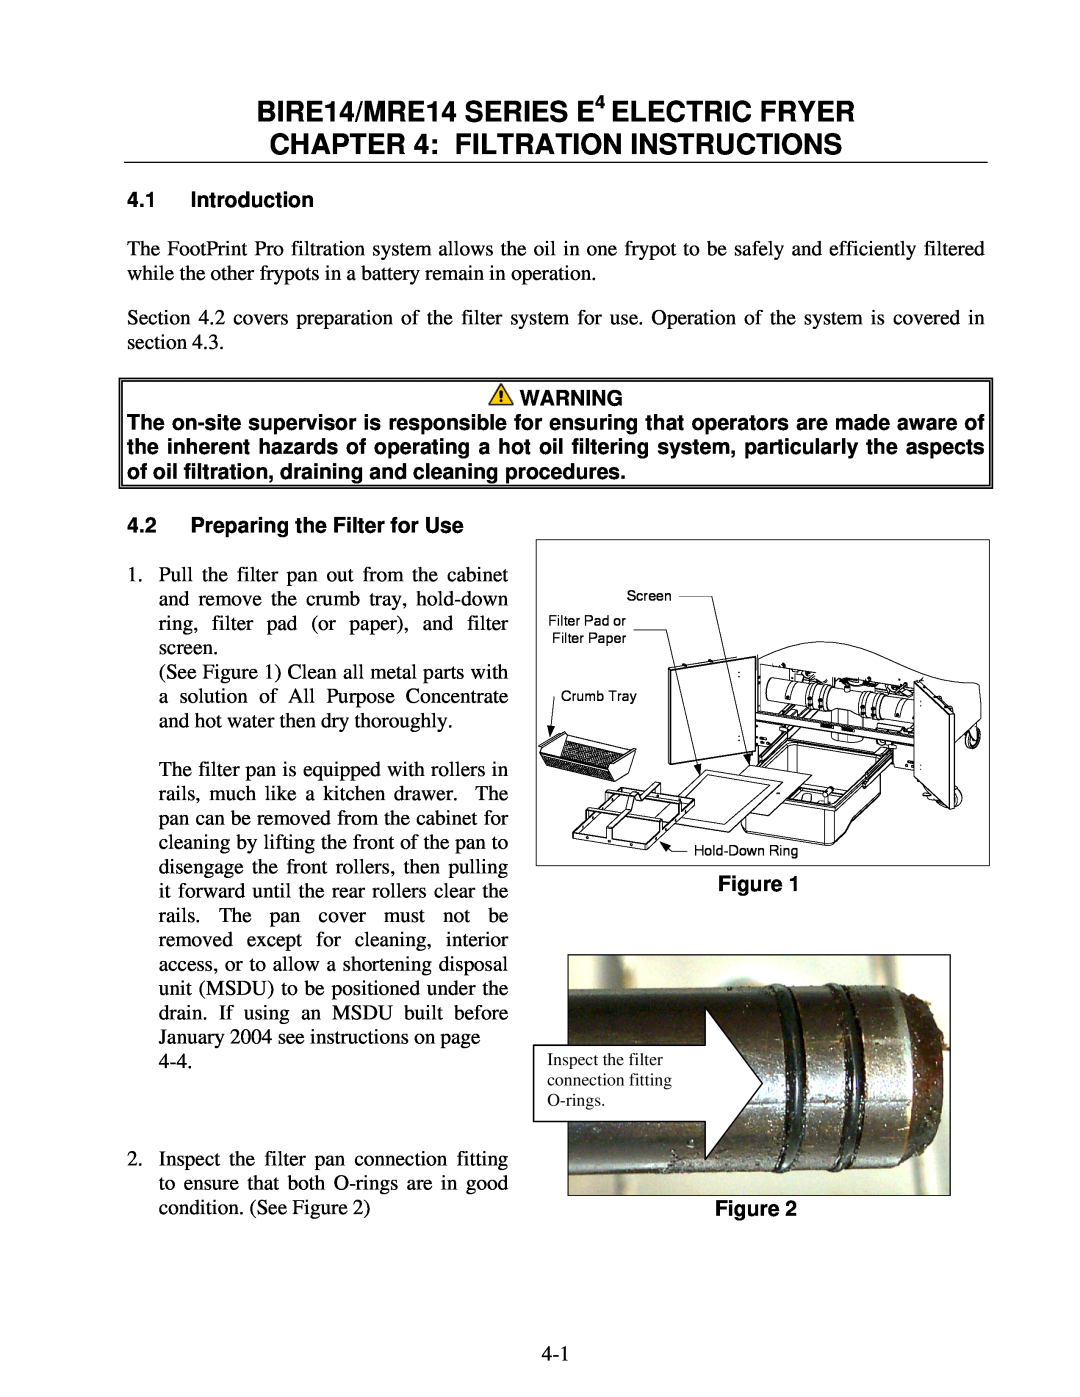 Frymaster warranty Filtration Instructions, BIRE14/MRE14 SERIES E4 ELECTRIC FRYER, 4.1Introduction 